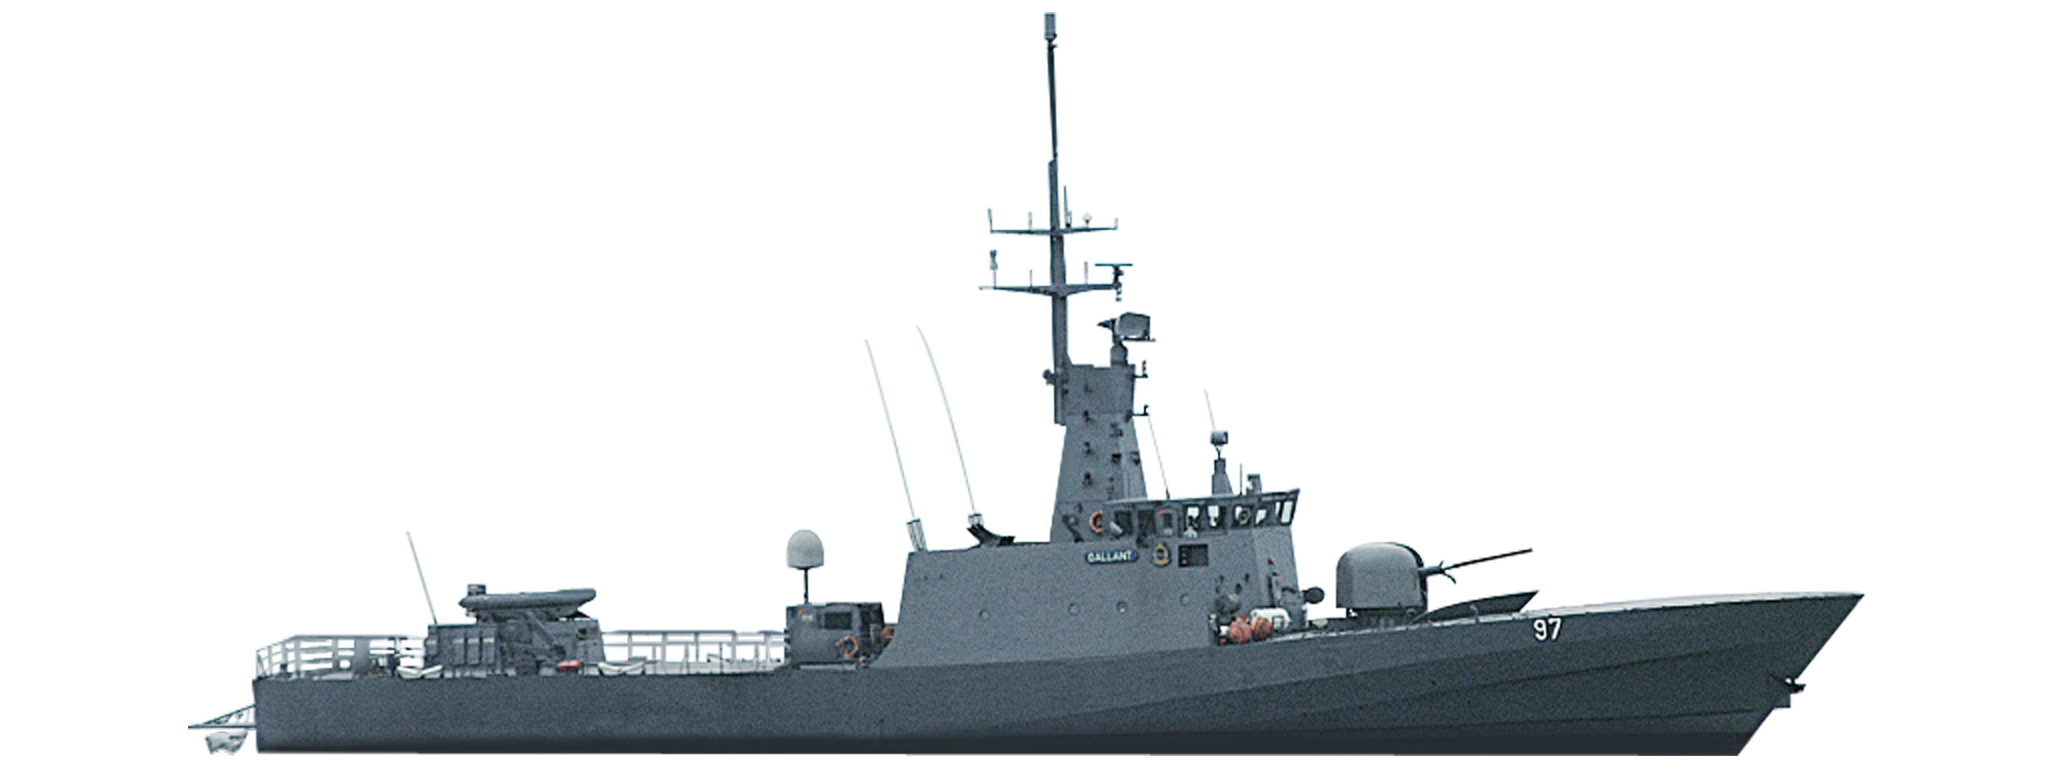 Fearless-Class Patrol Combat Warship Vessel Littoral Ship Clipart